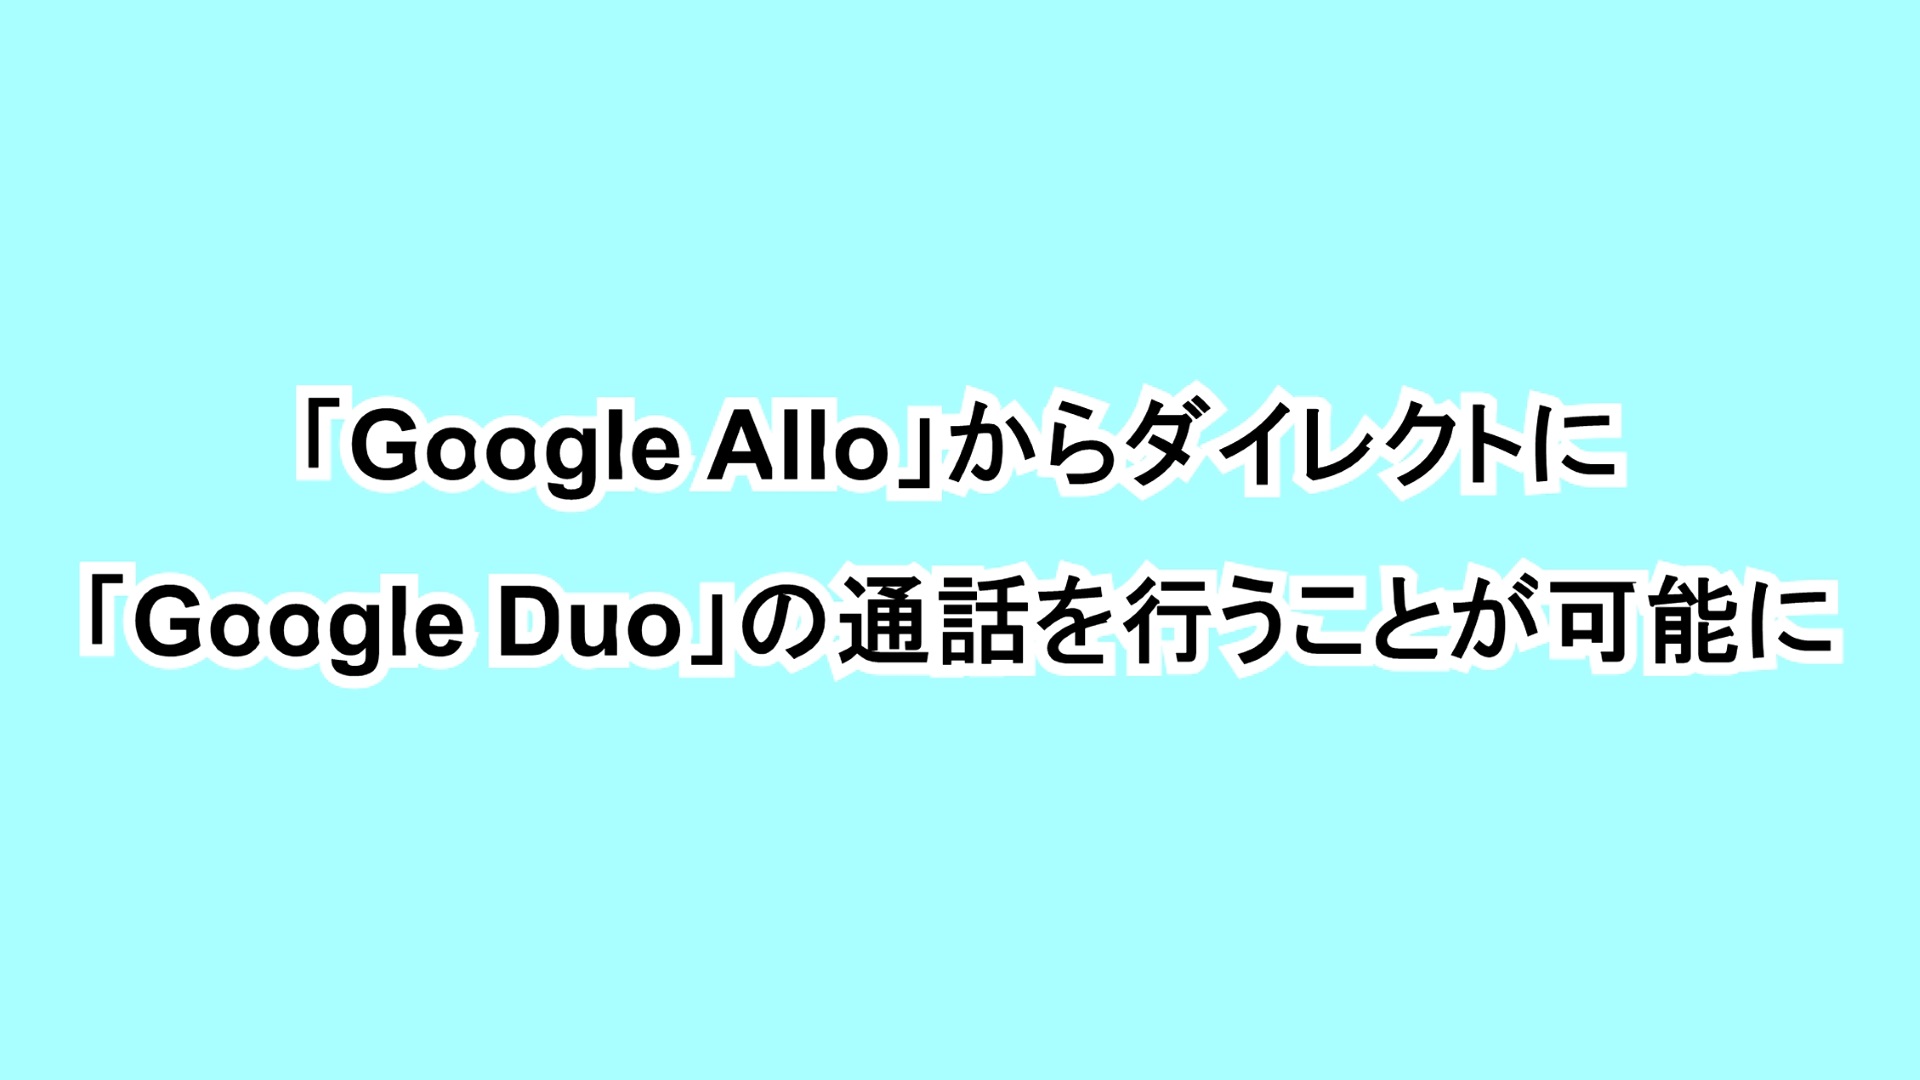 「Google Allo」からダイレクトに「Google Duo」の通話を行うことが可能に